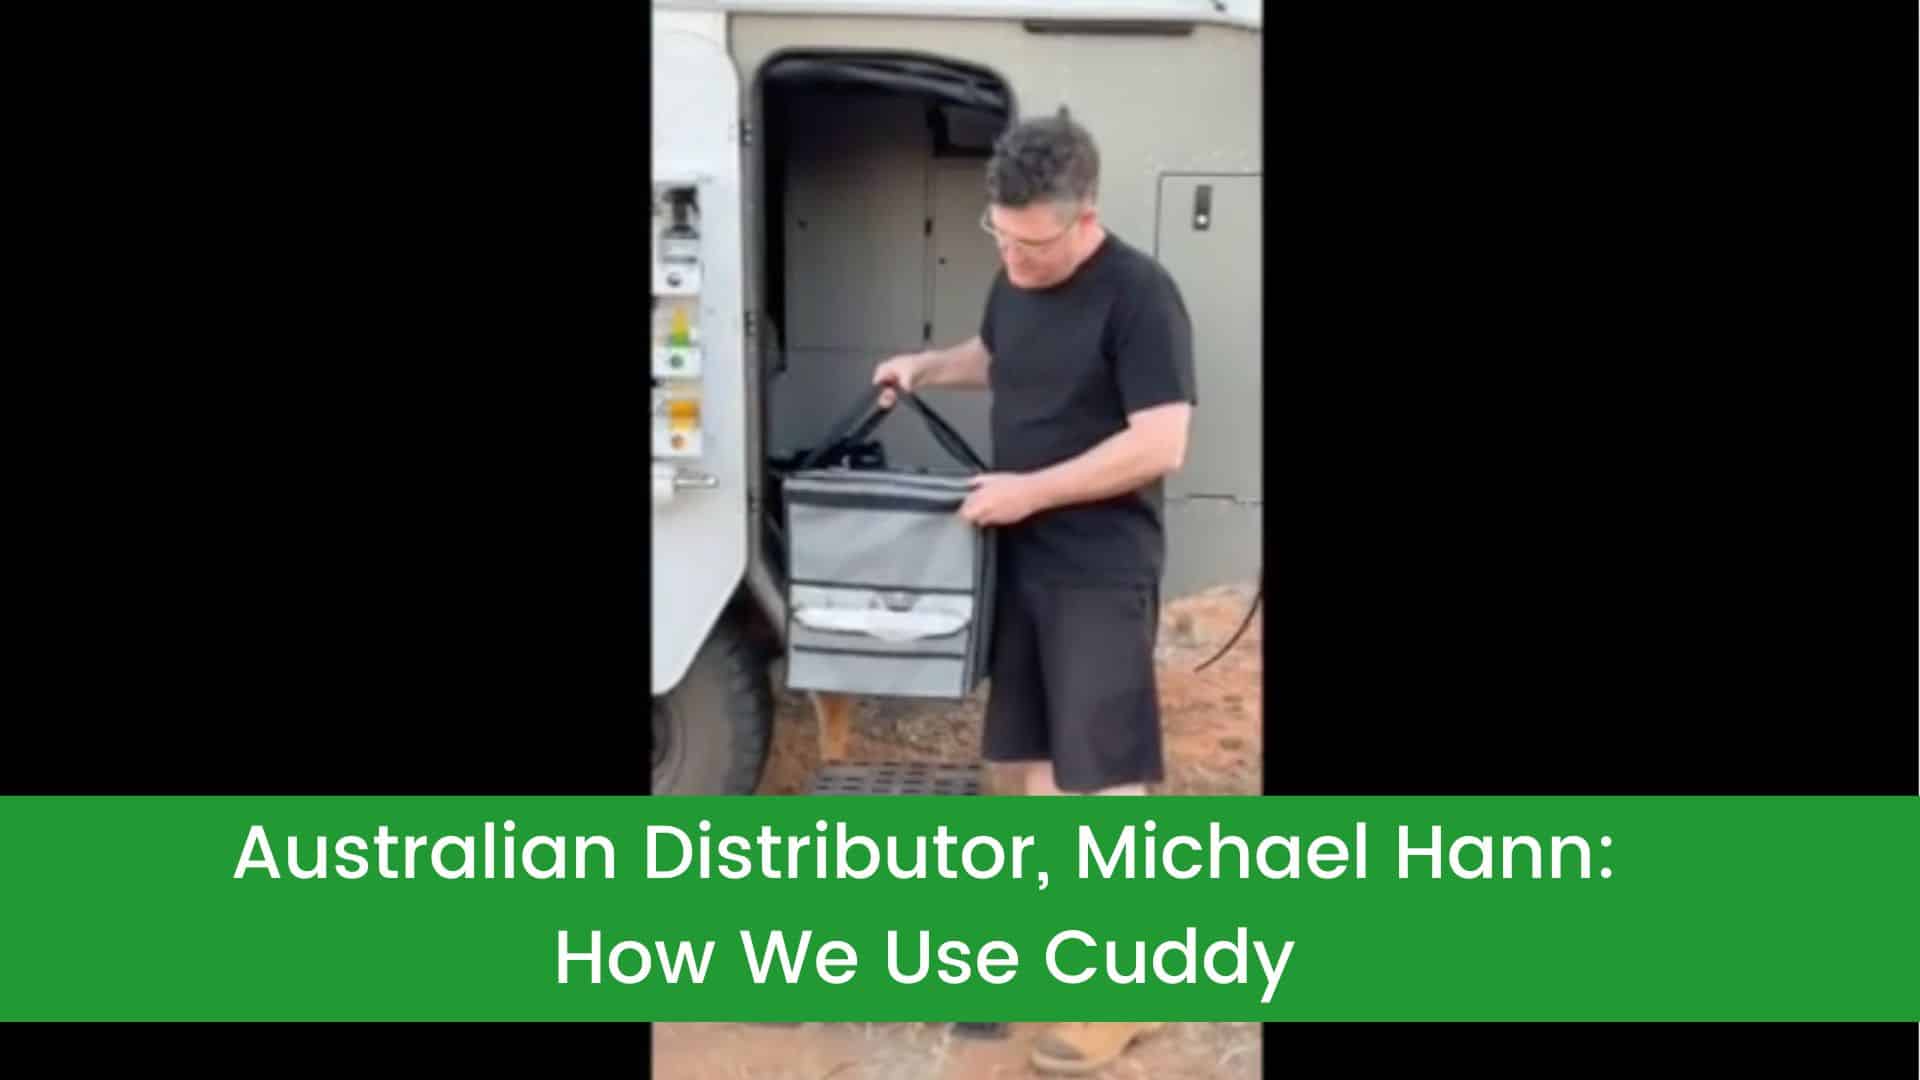 Cuddy's Convenience in Queensland, Australia